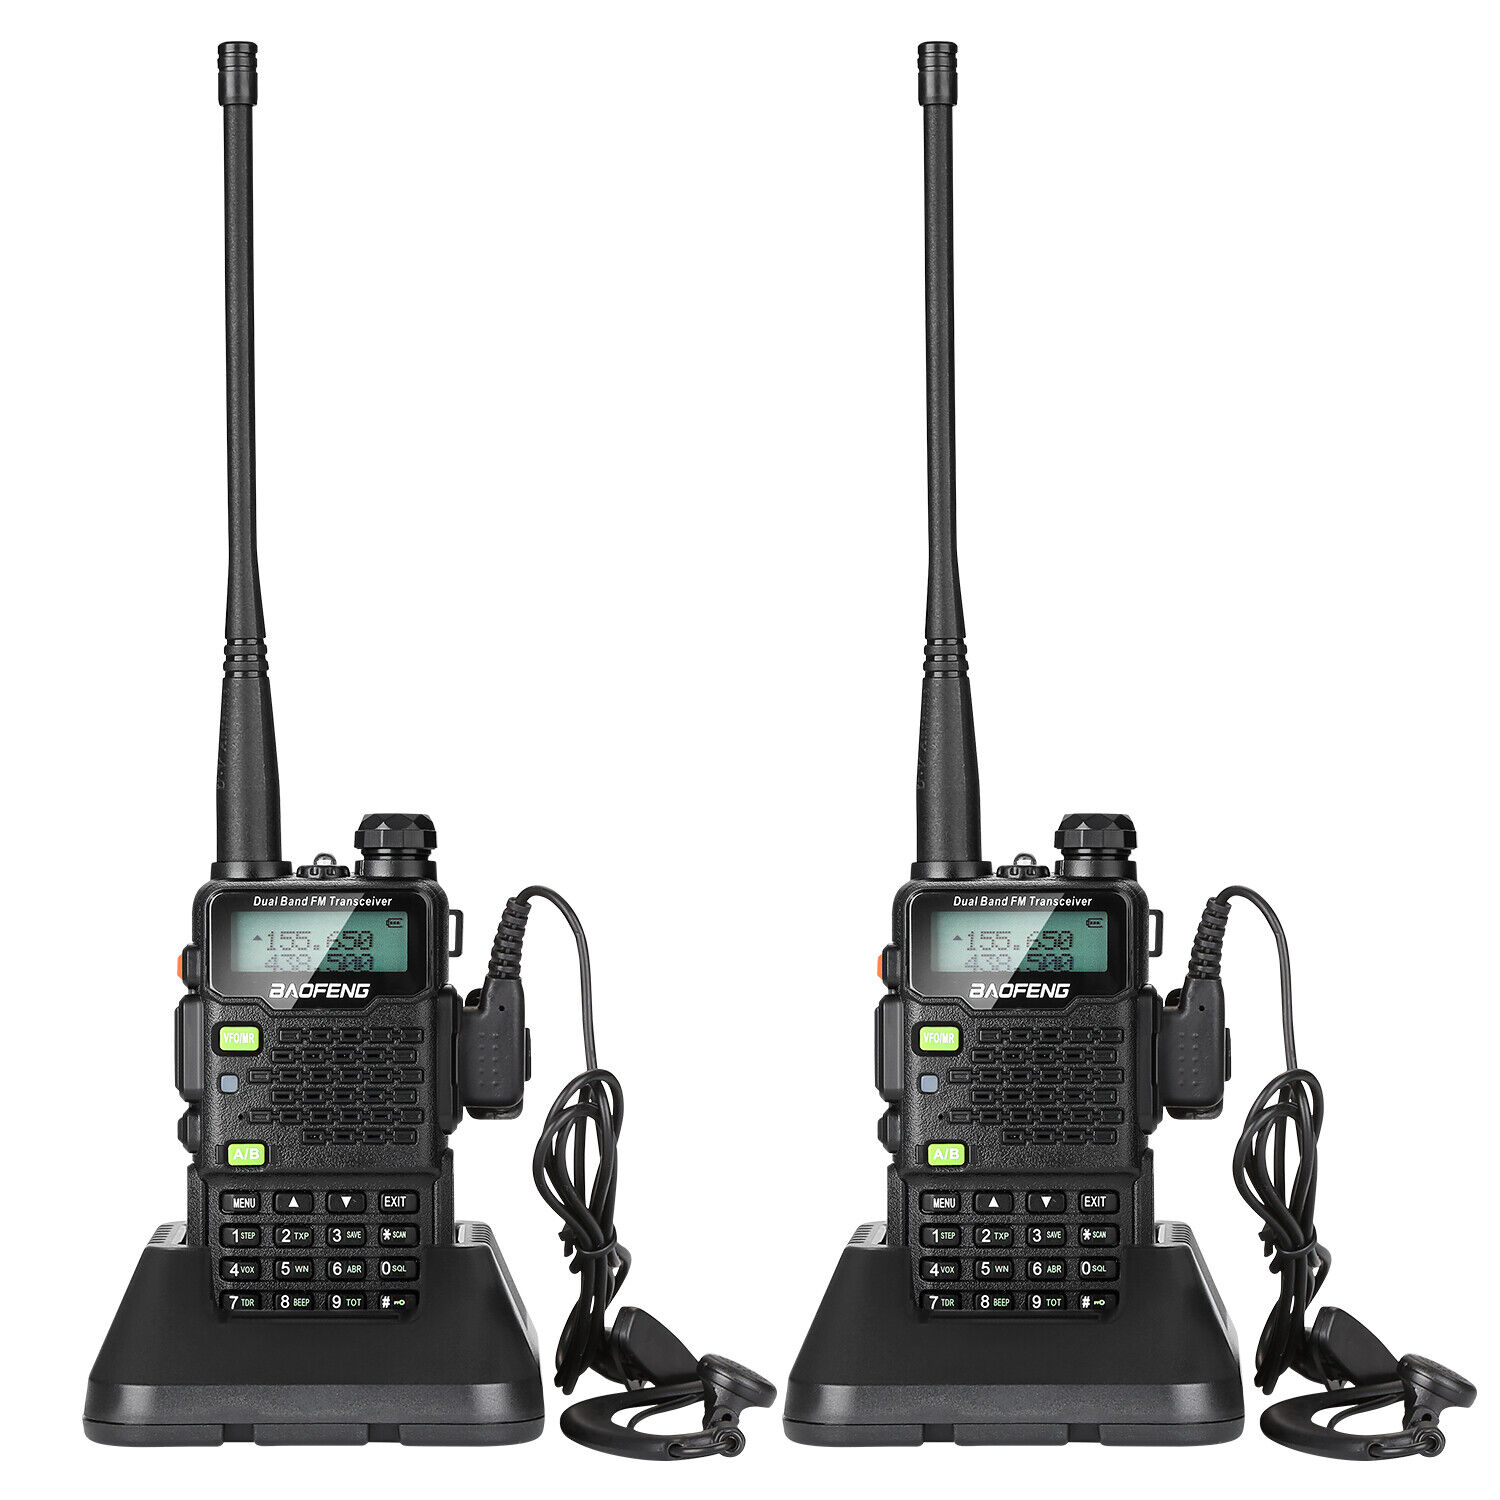 Set 2 BAOFENG UV-5R5 Two-Way Radios Walkie Talkies Speaker 3-5KM Long Range Mic